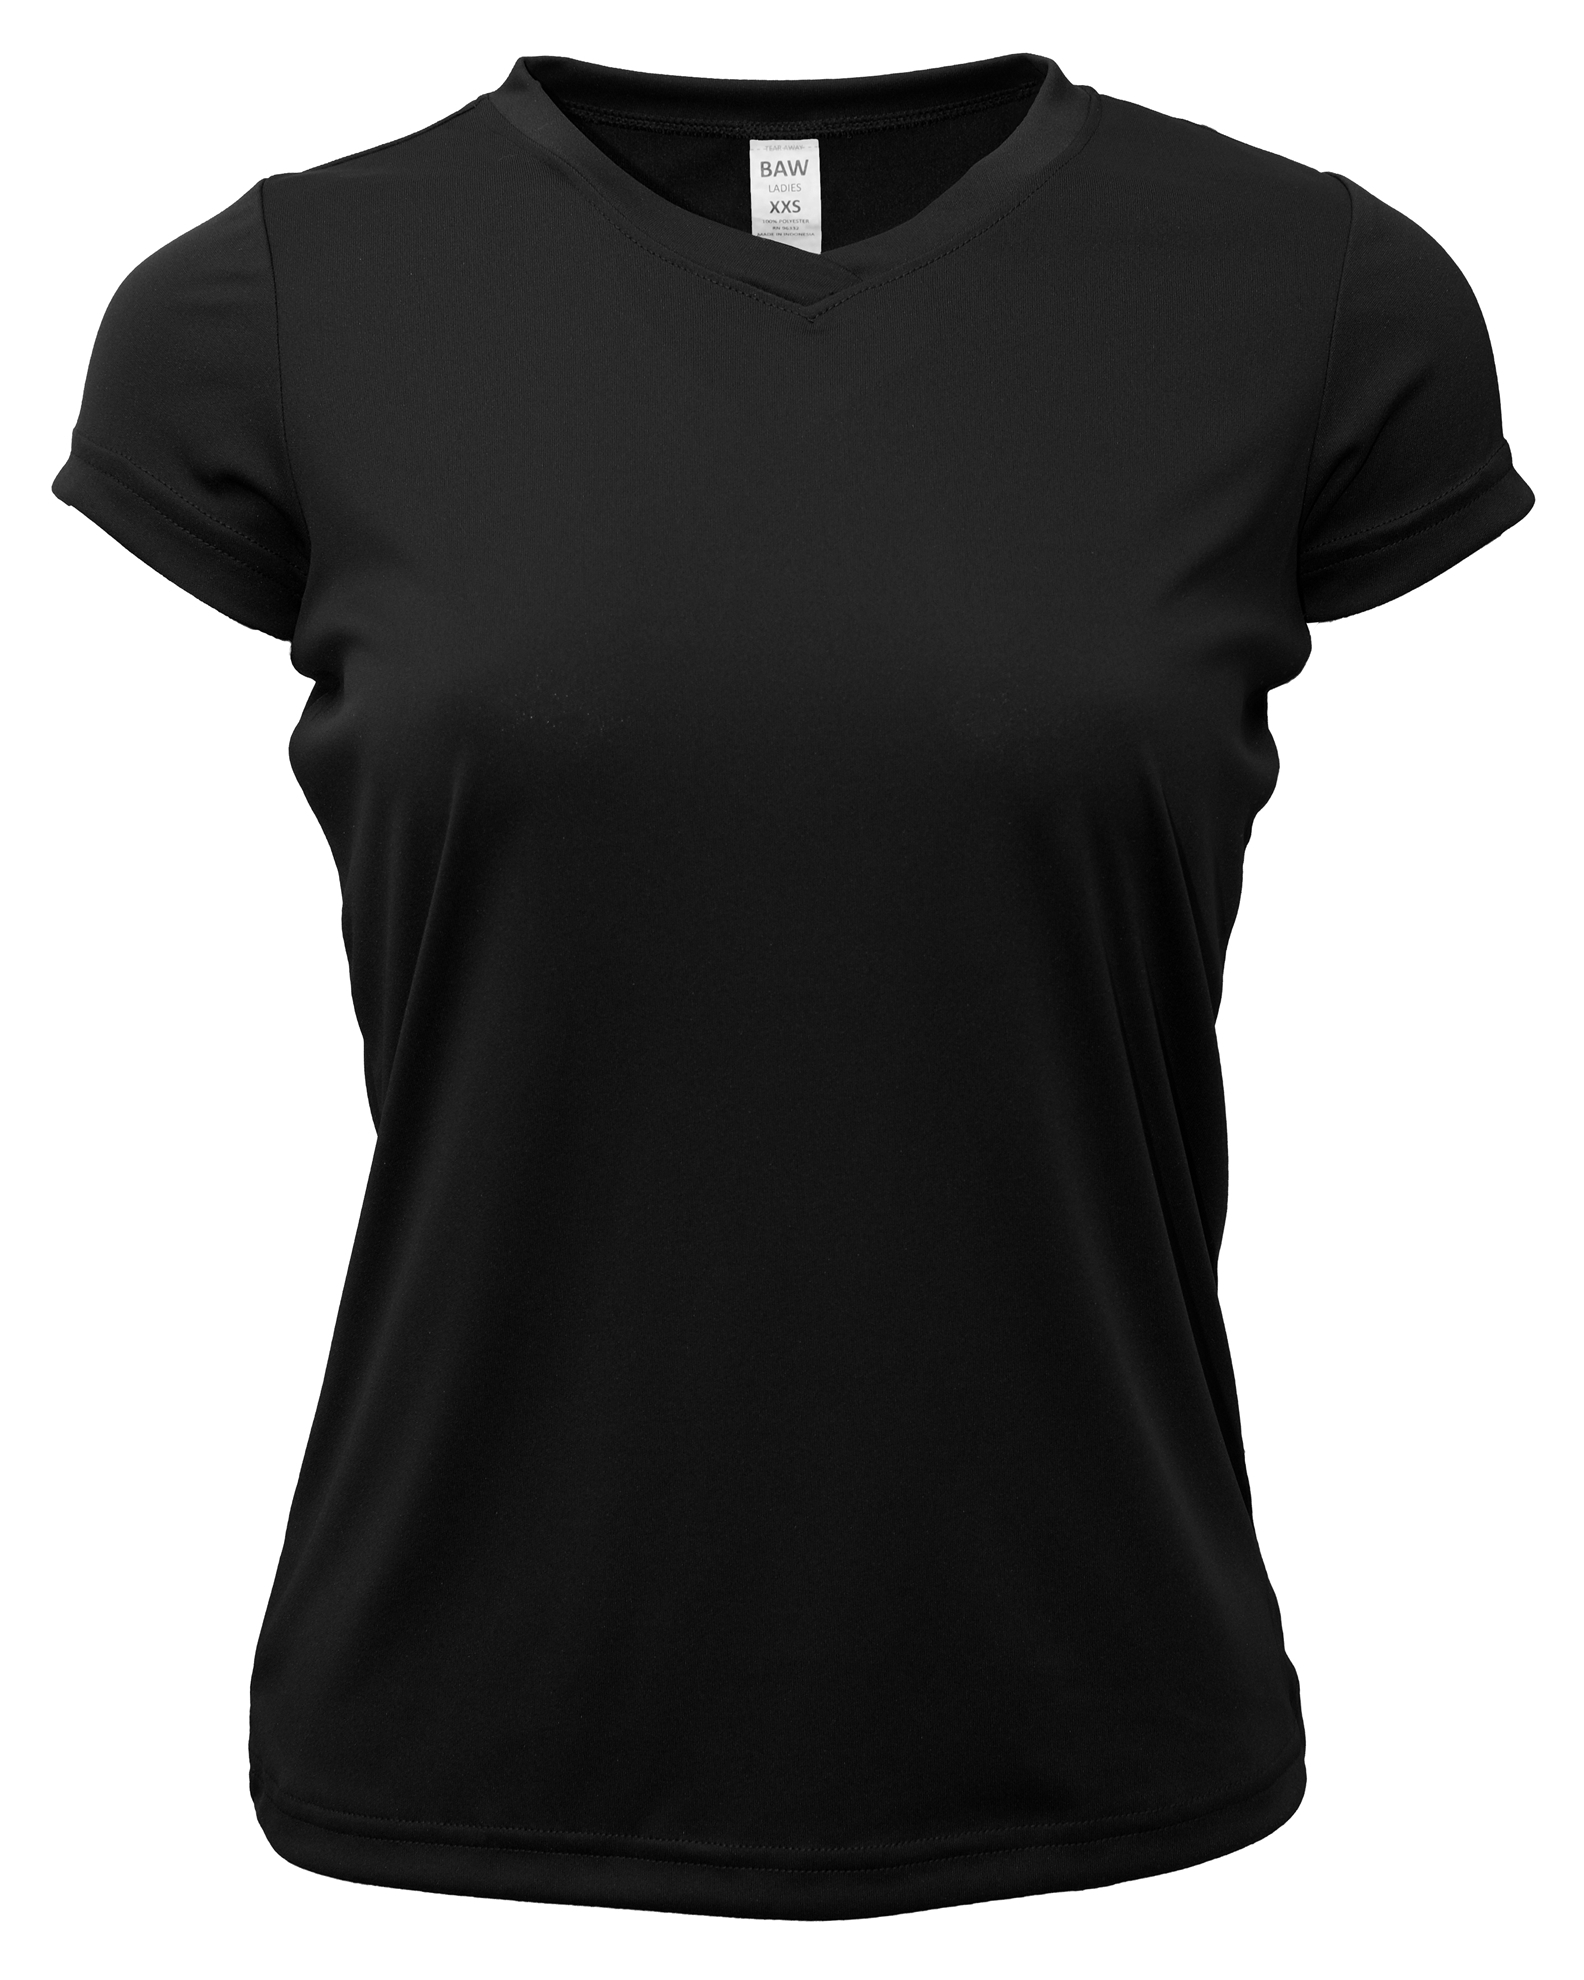 BAW Athletic Wear XT77 - Ladies Xtreme-Tek V-Neck Shirt